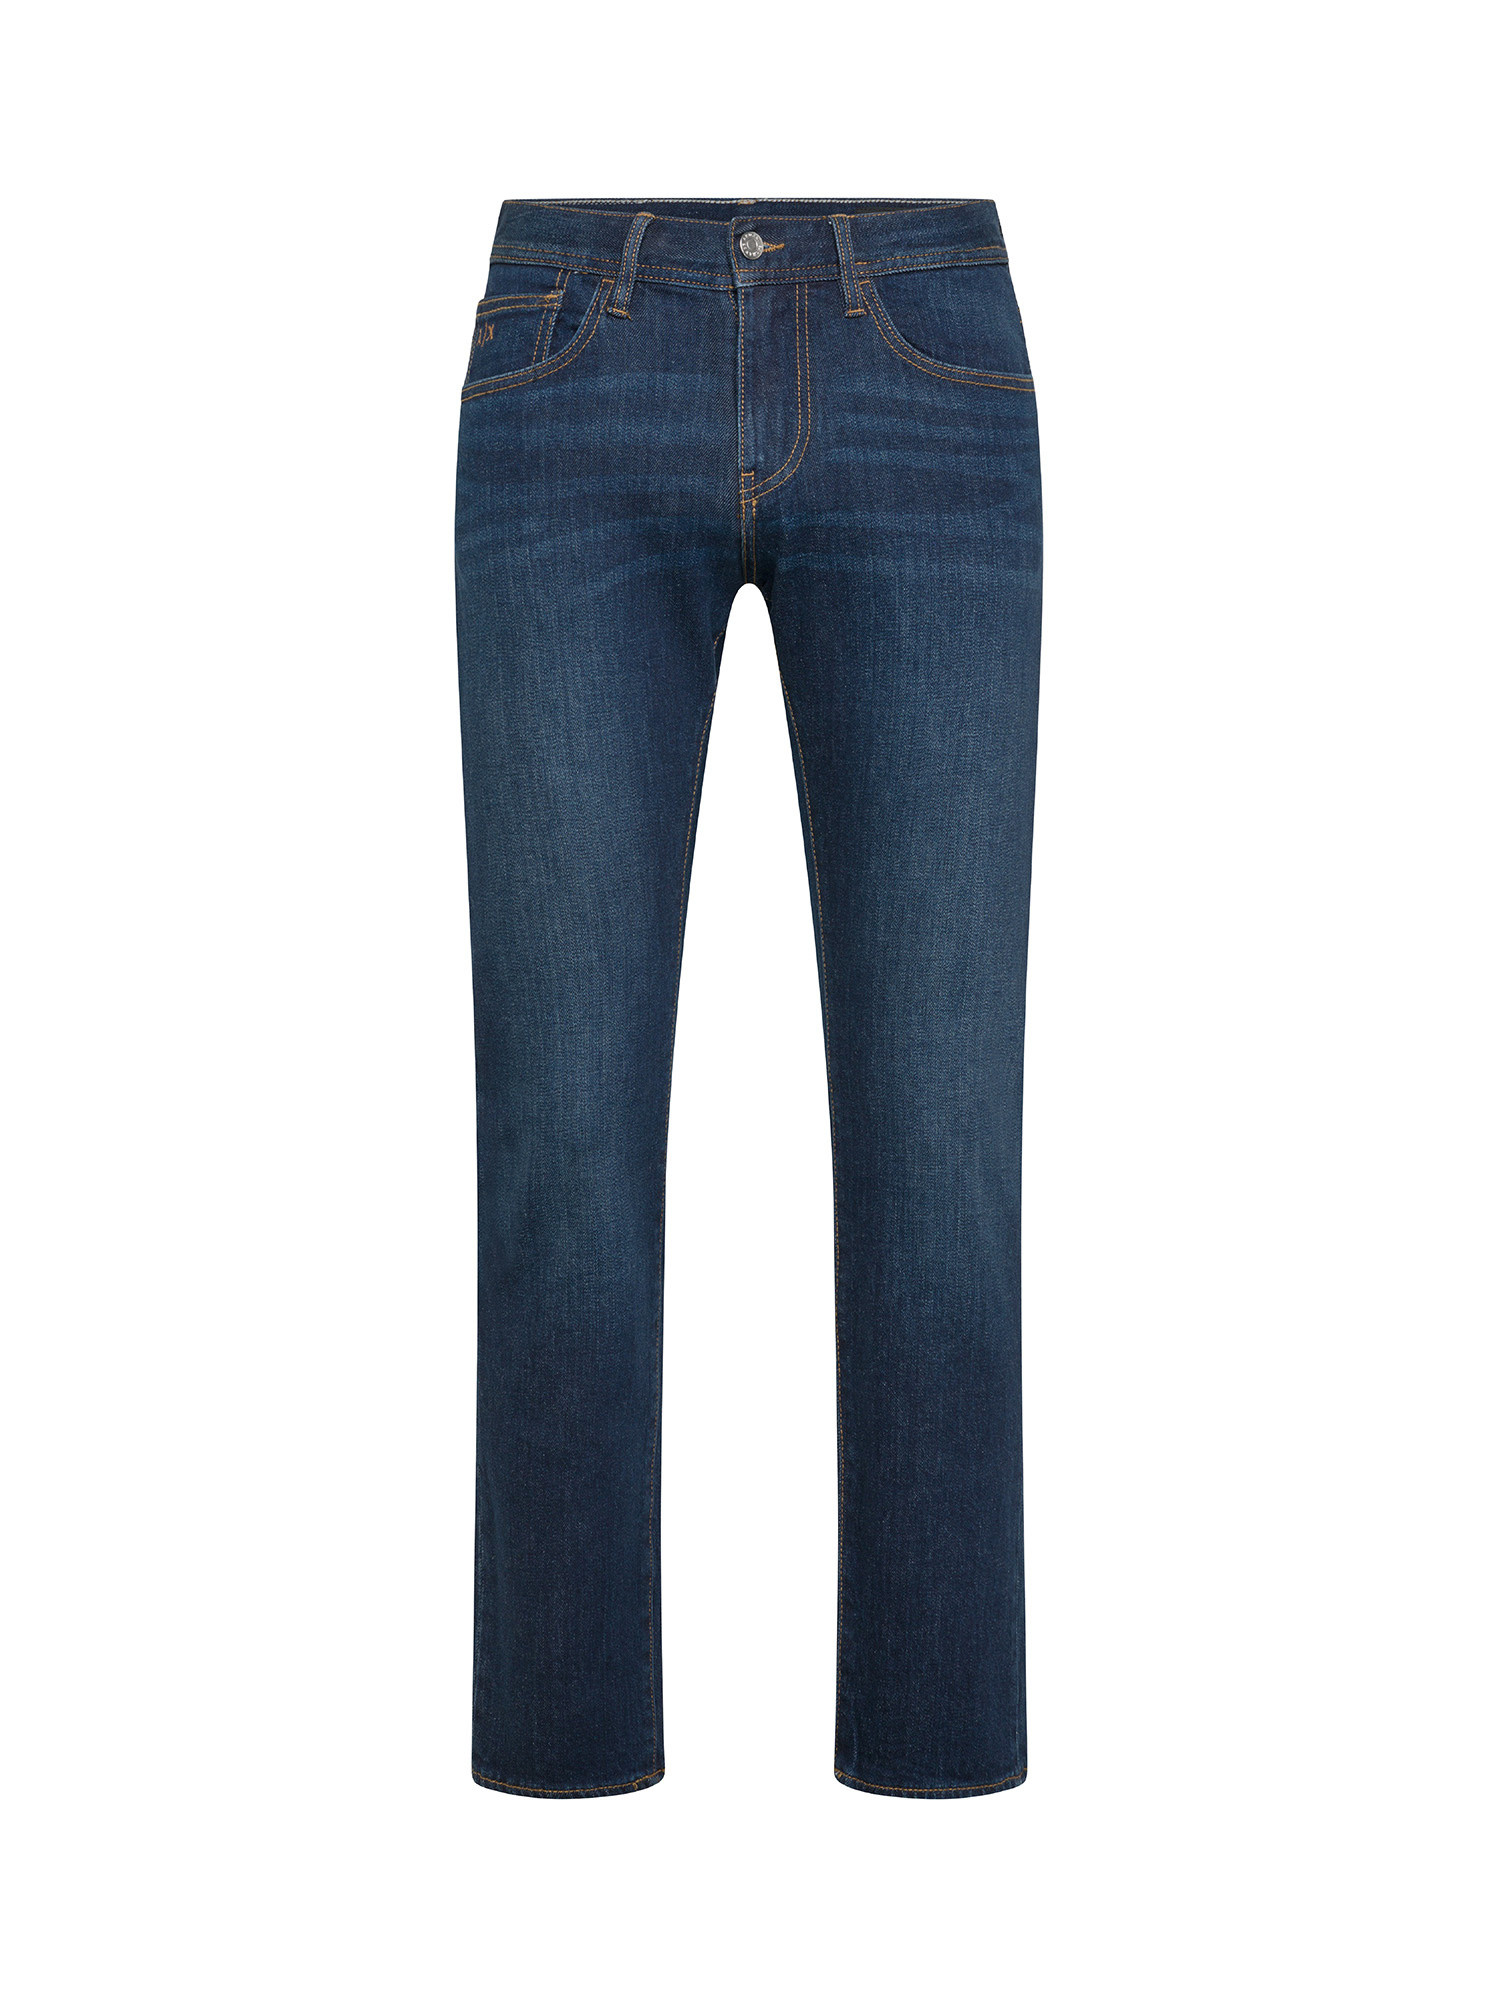 Armani Exchange - Jeans cinque tasche slim fit, Blu scuro, large image number 0